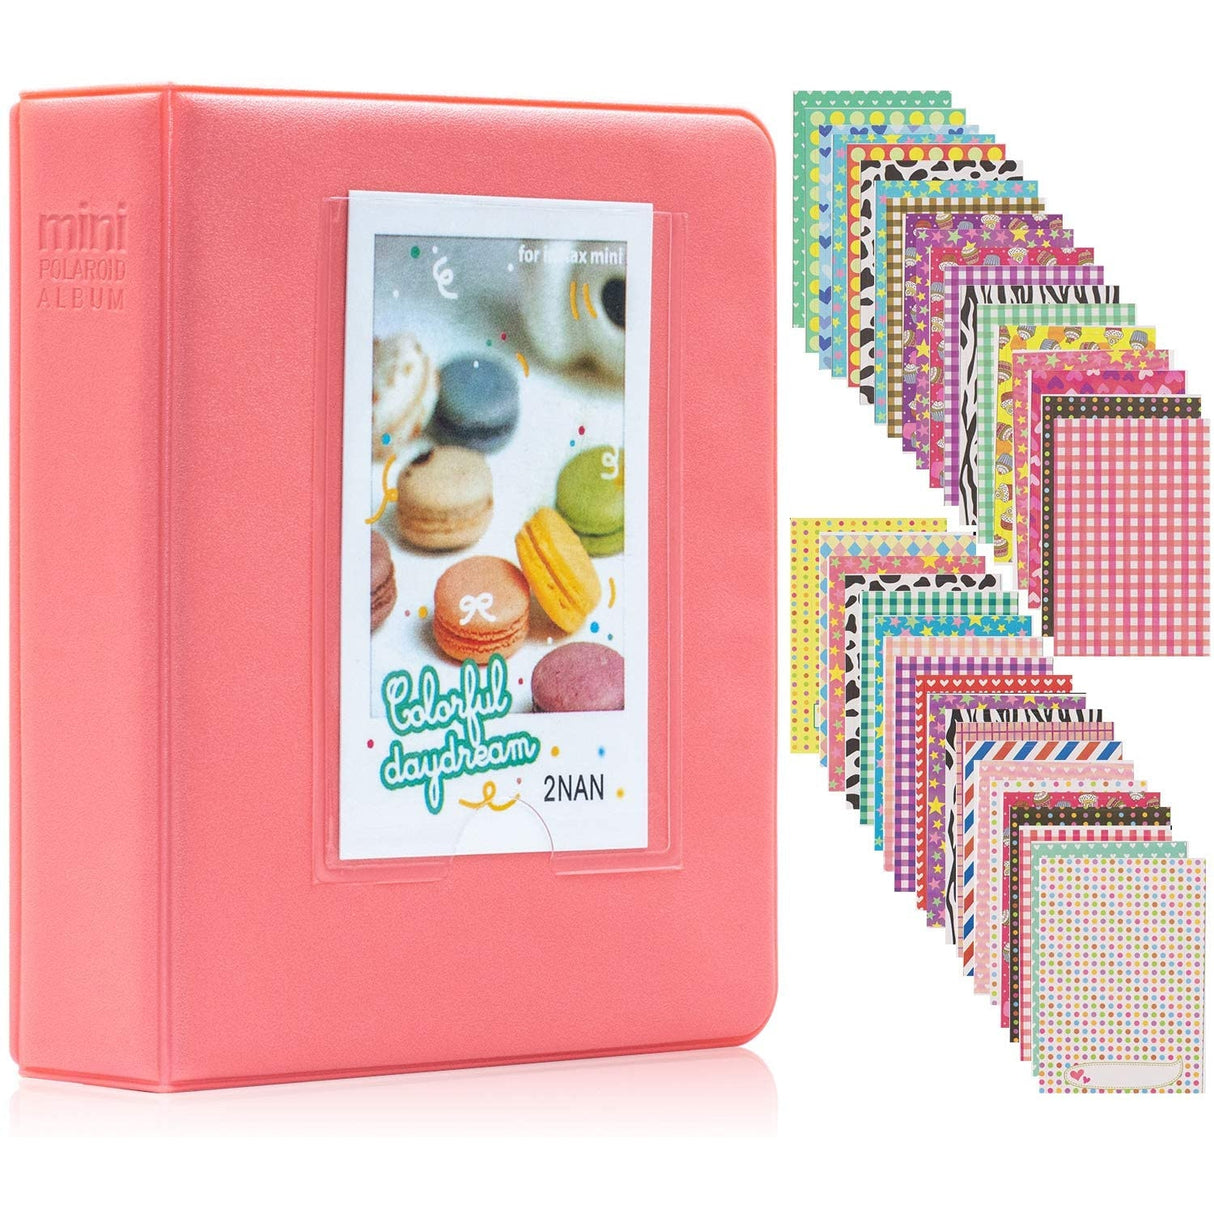 Pink 3 Film Album, 160 Sheet Pocket Album With 20 Stickers, Family Album  For Fujifilm Instax Mini 7s 8 8+ 9 25 50 70 90, Polaroid, Kodak Mini 3  Film